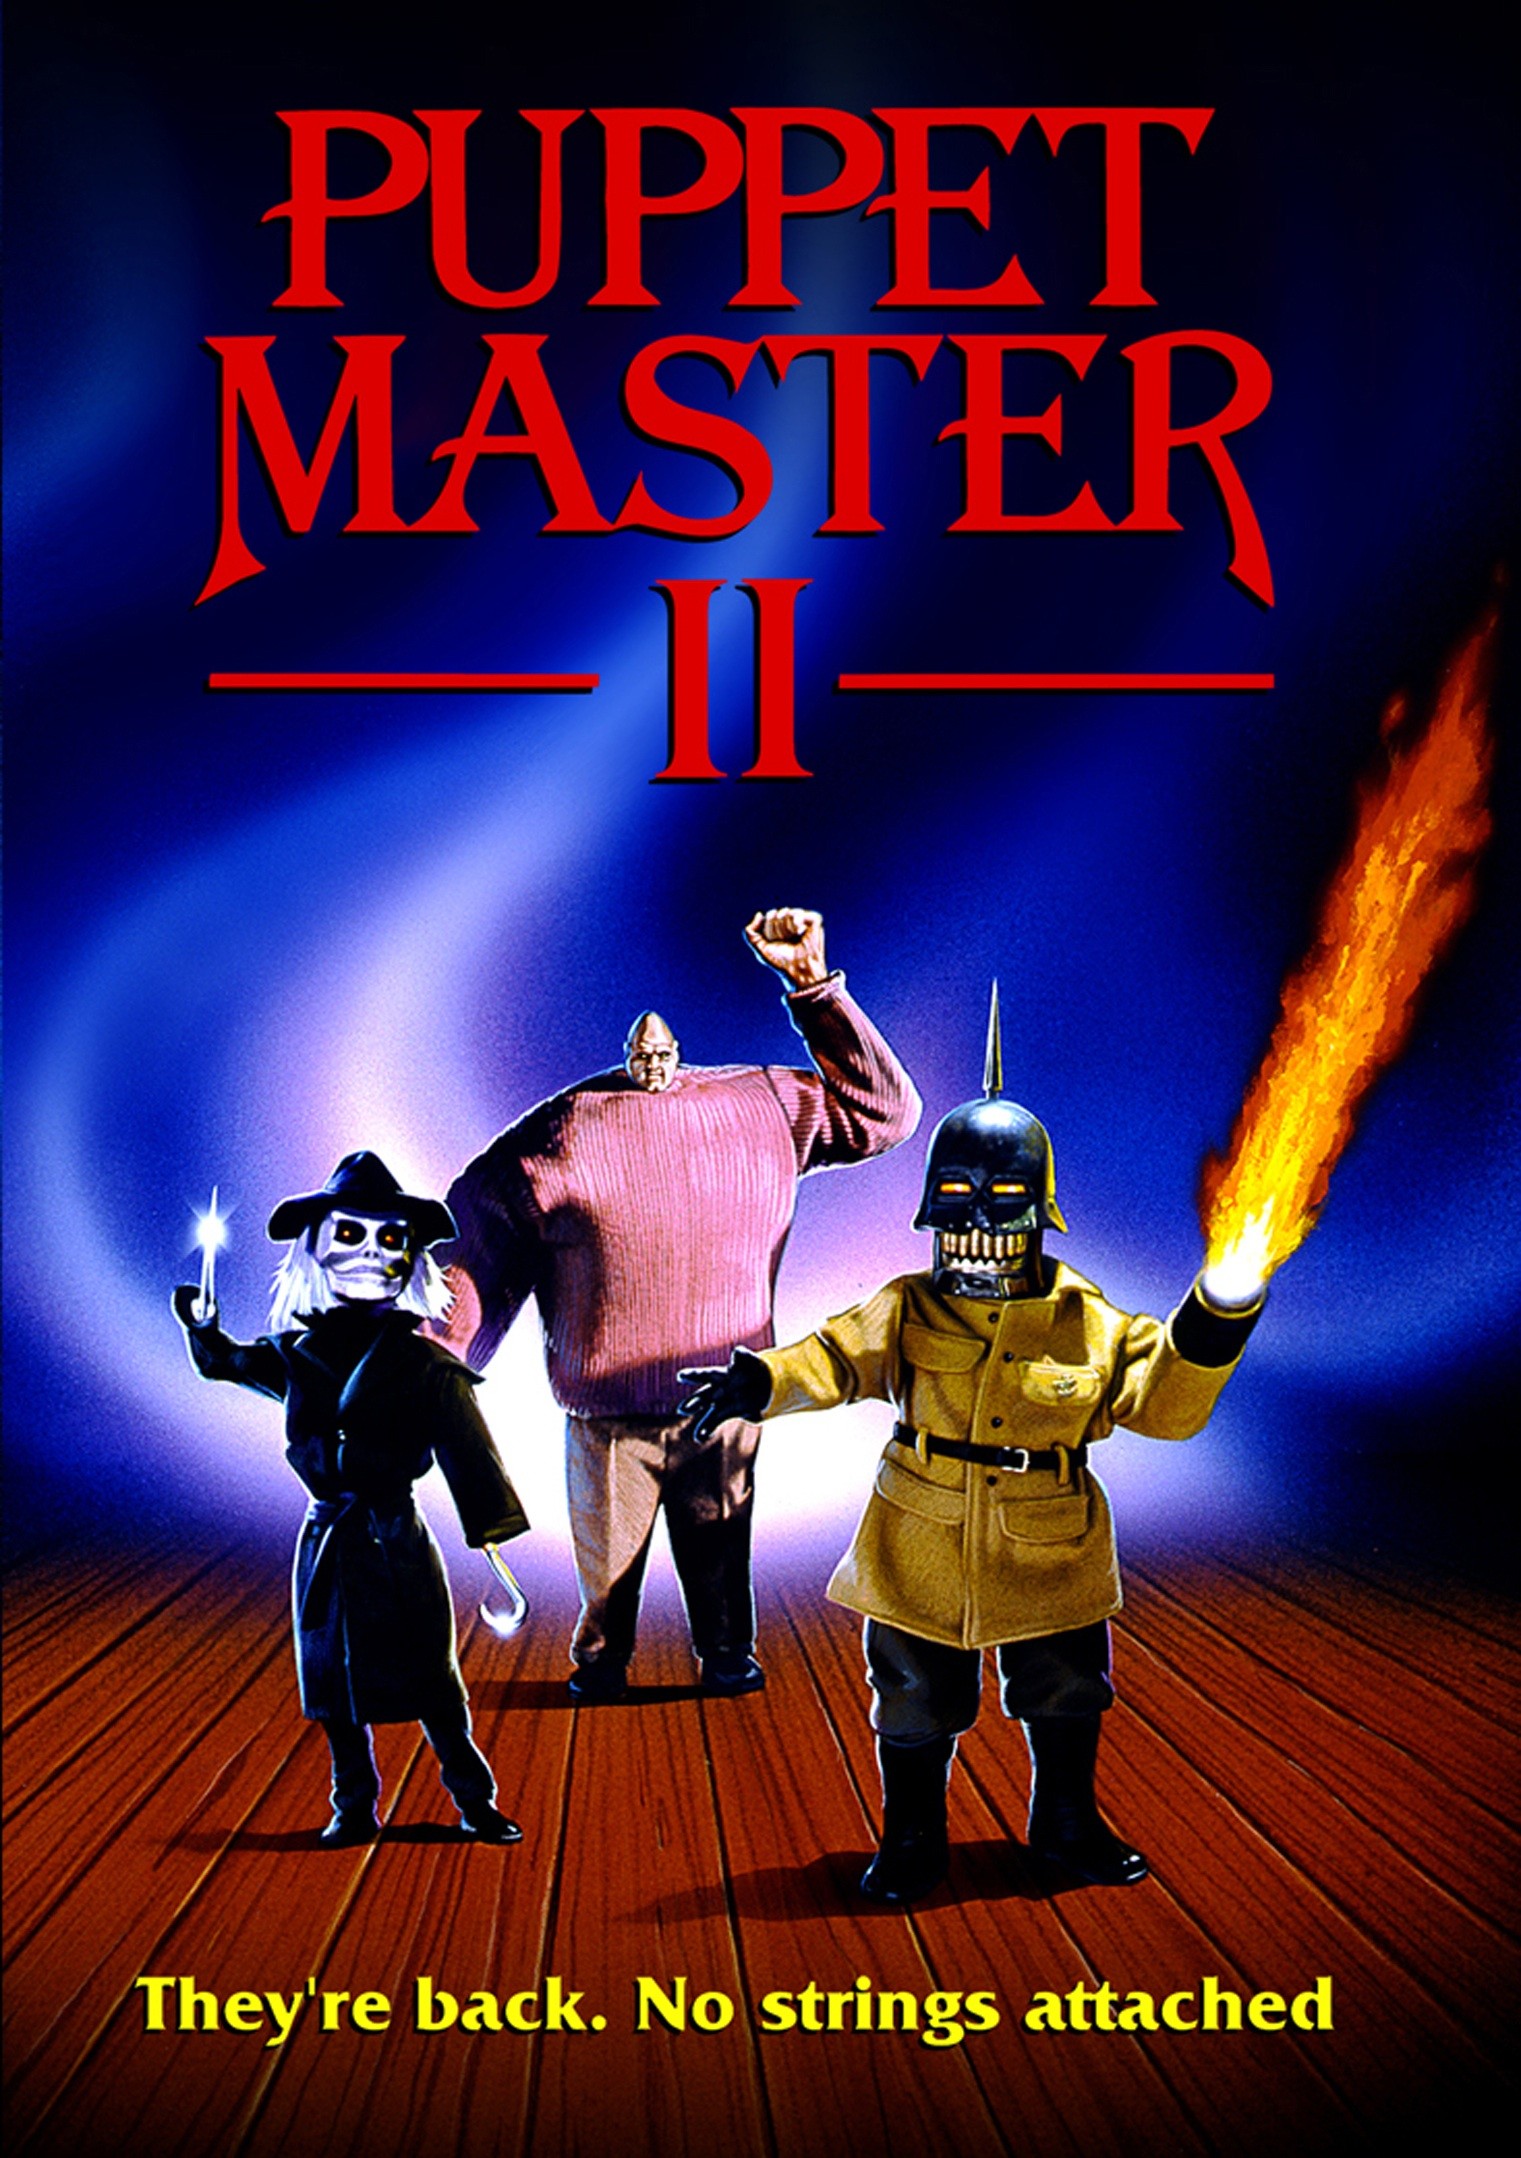 Puppet Master II | Puppet master Wiki | FANDOM powered by Wikia